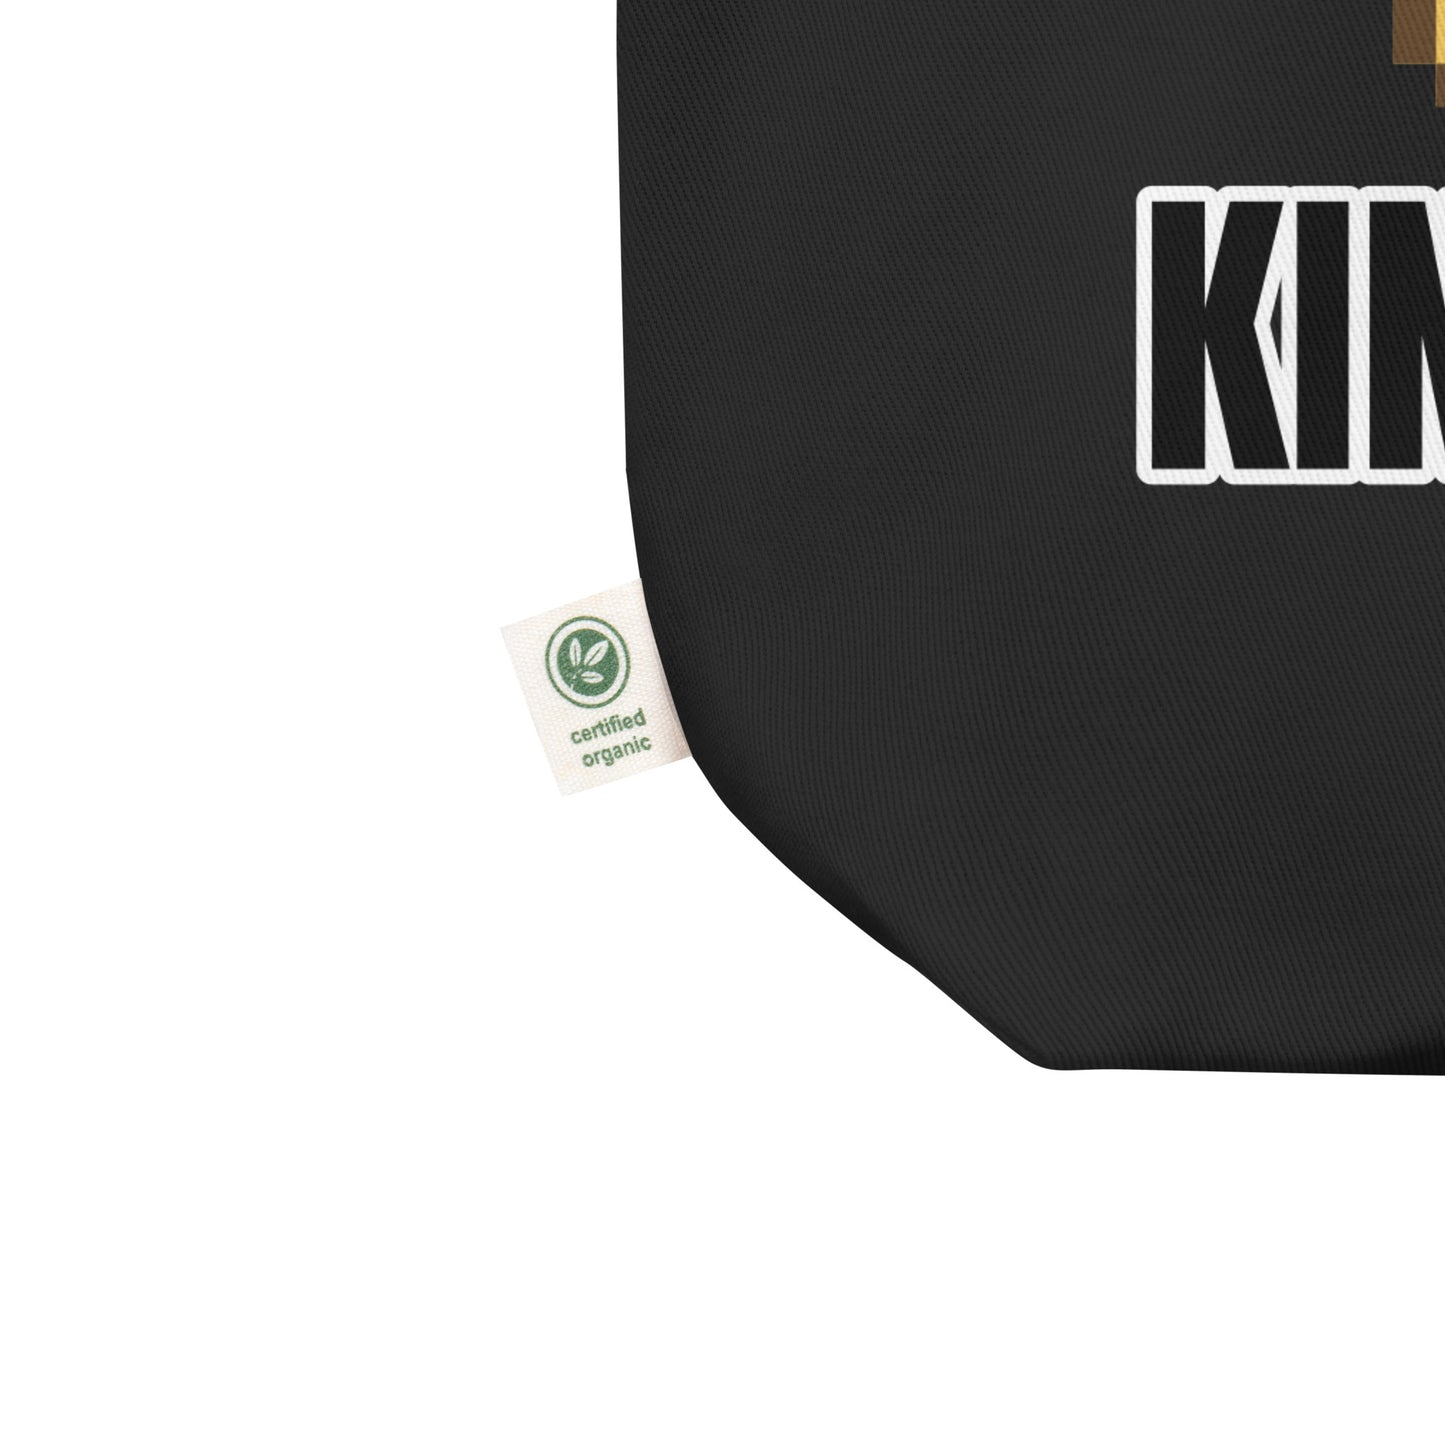 King Jesus Eco Tote Bag